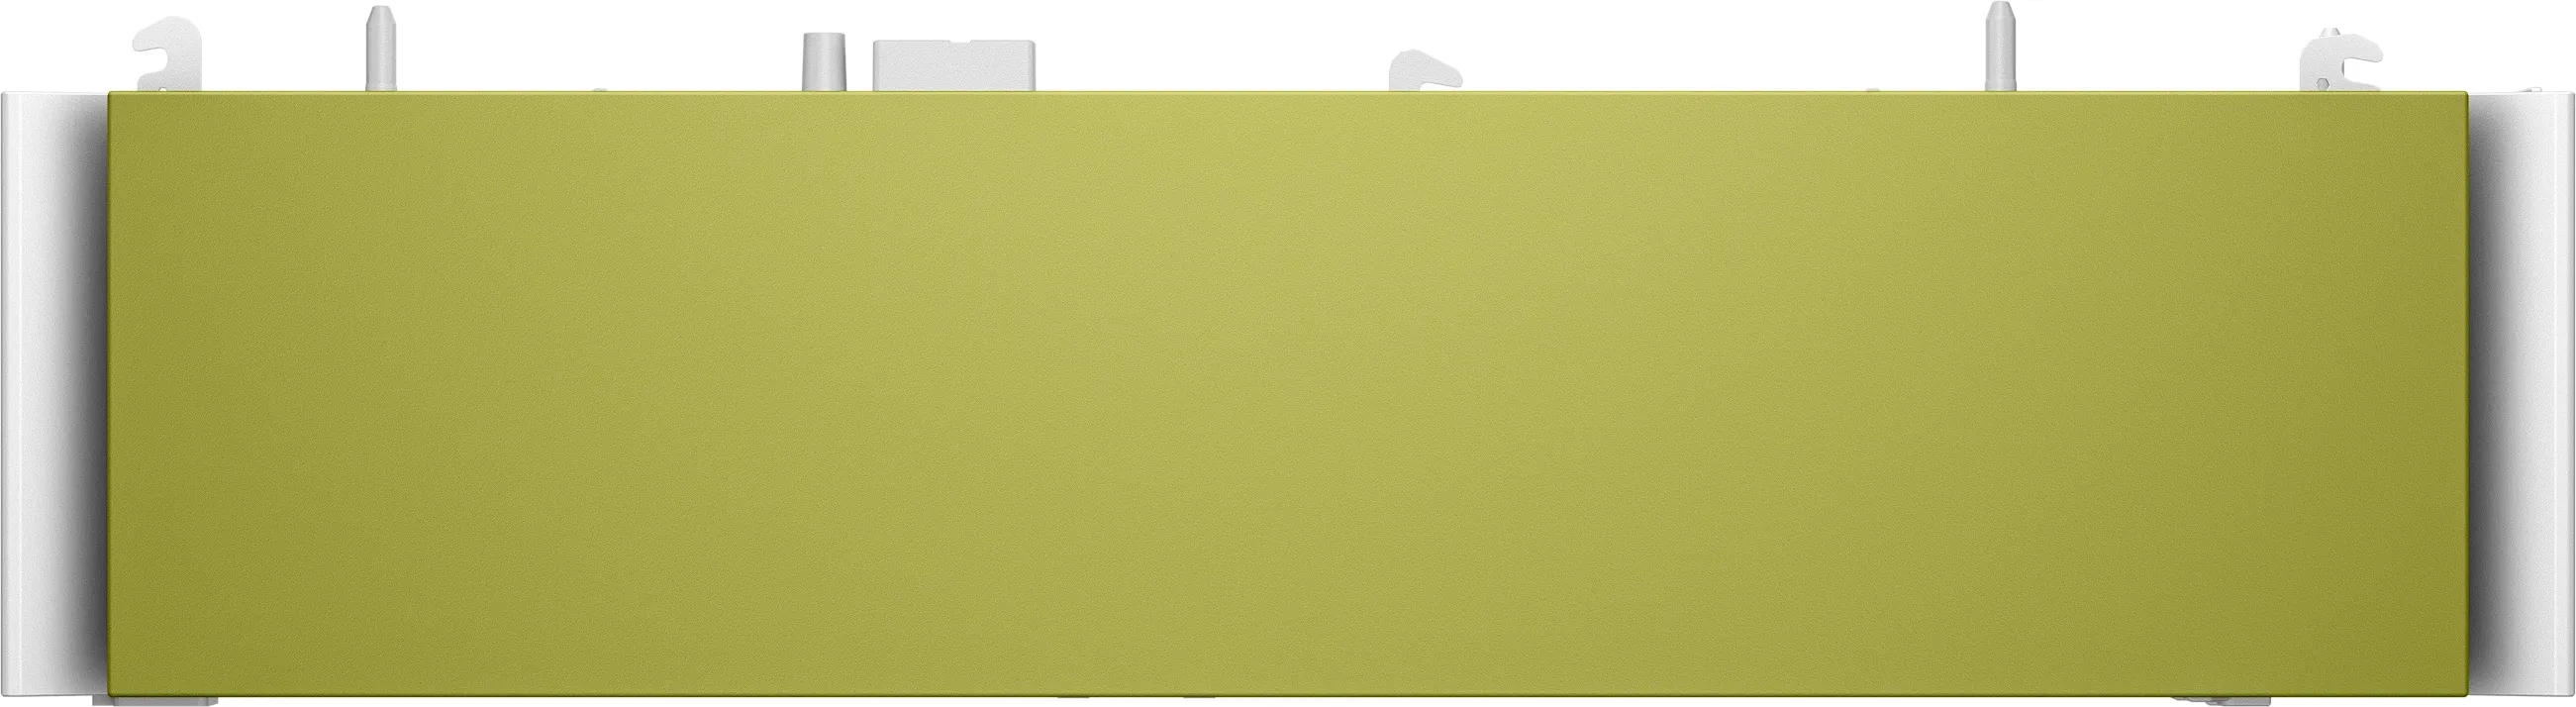 Vente HP Clr LJ Green 550 Sheet Paper Tray HP au meilleur prix - visuel 4